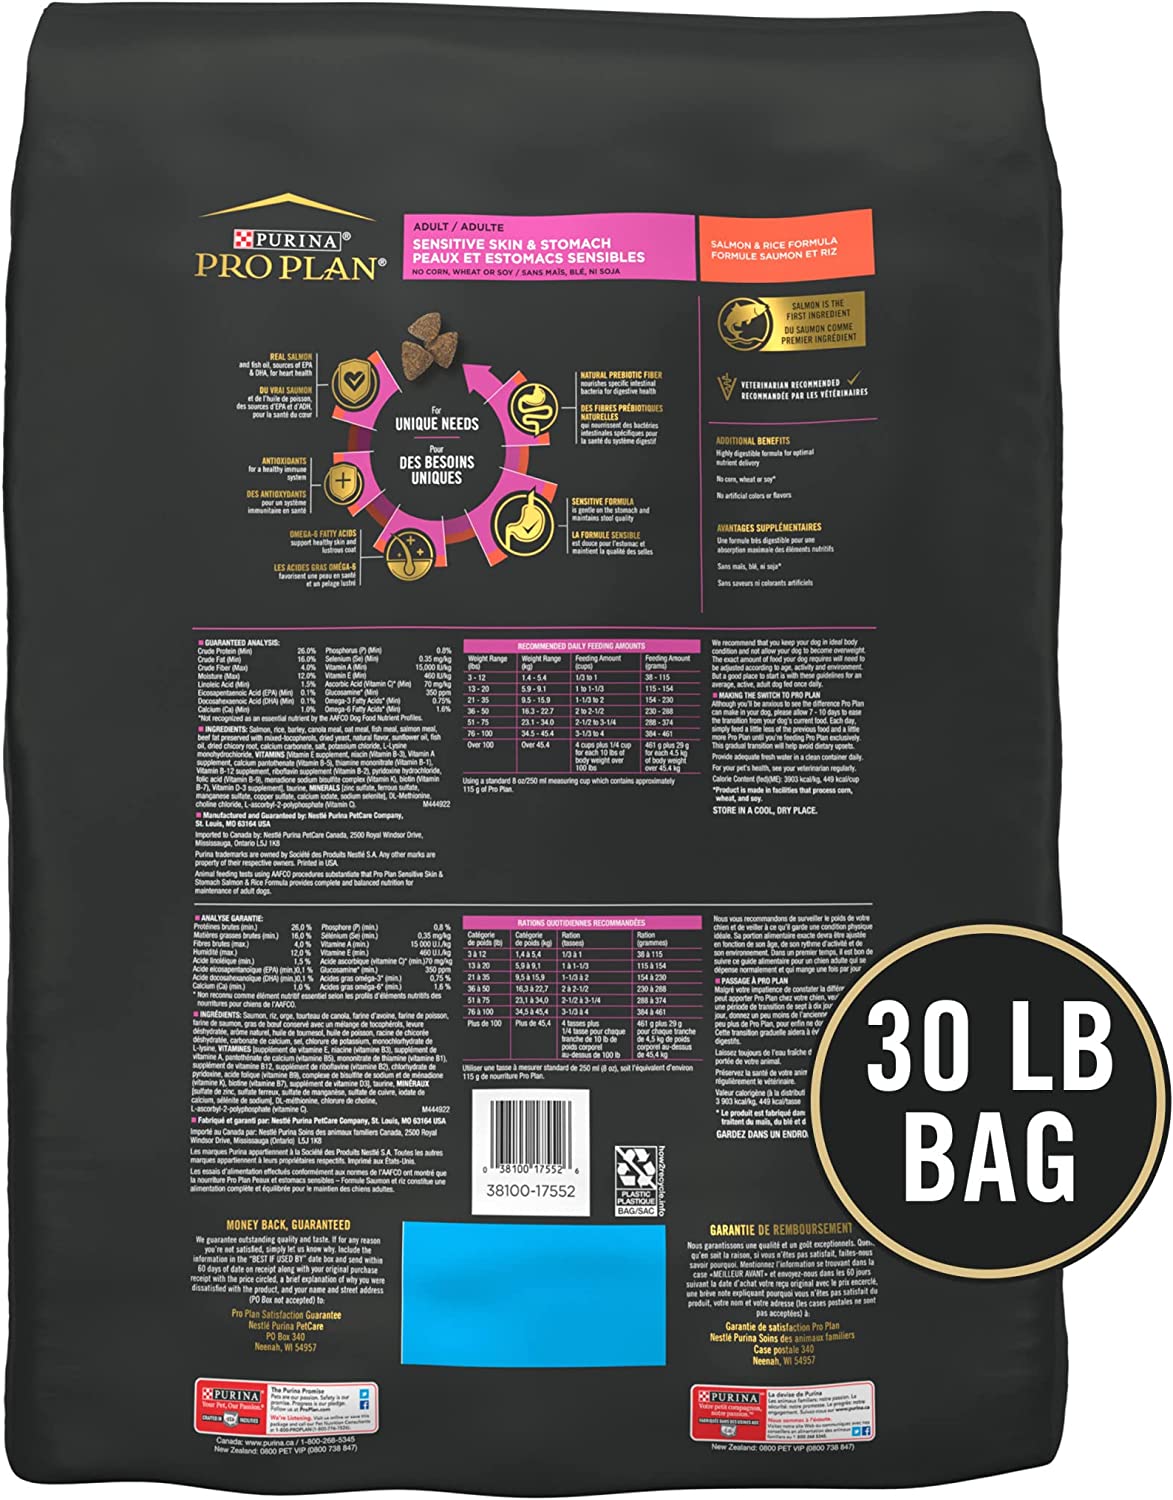 Purina Pro Plan Sensitive Skin and Stomach Dog Food Salmon and Rice Formula - 30 lb. Bag